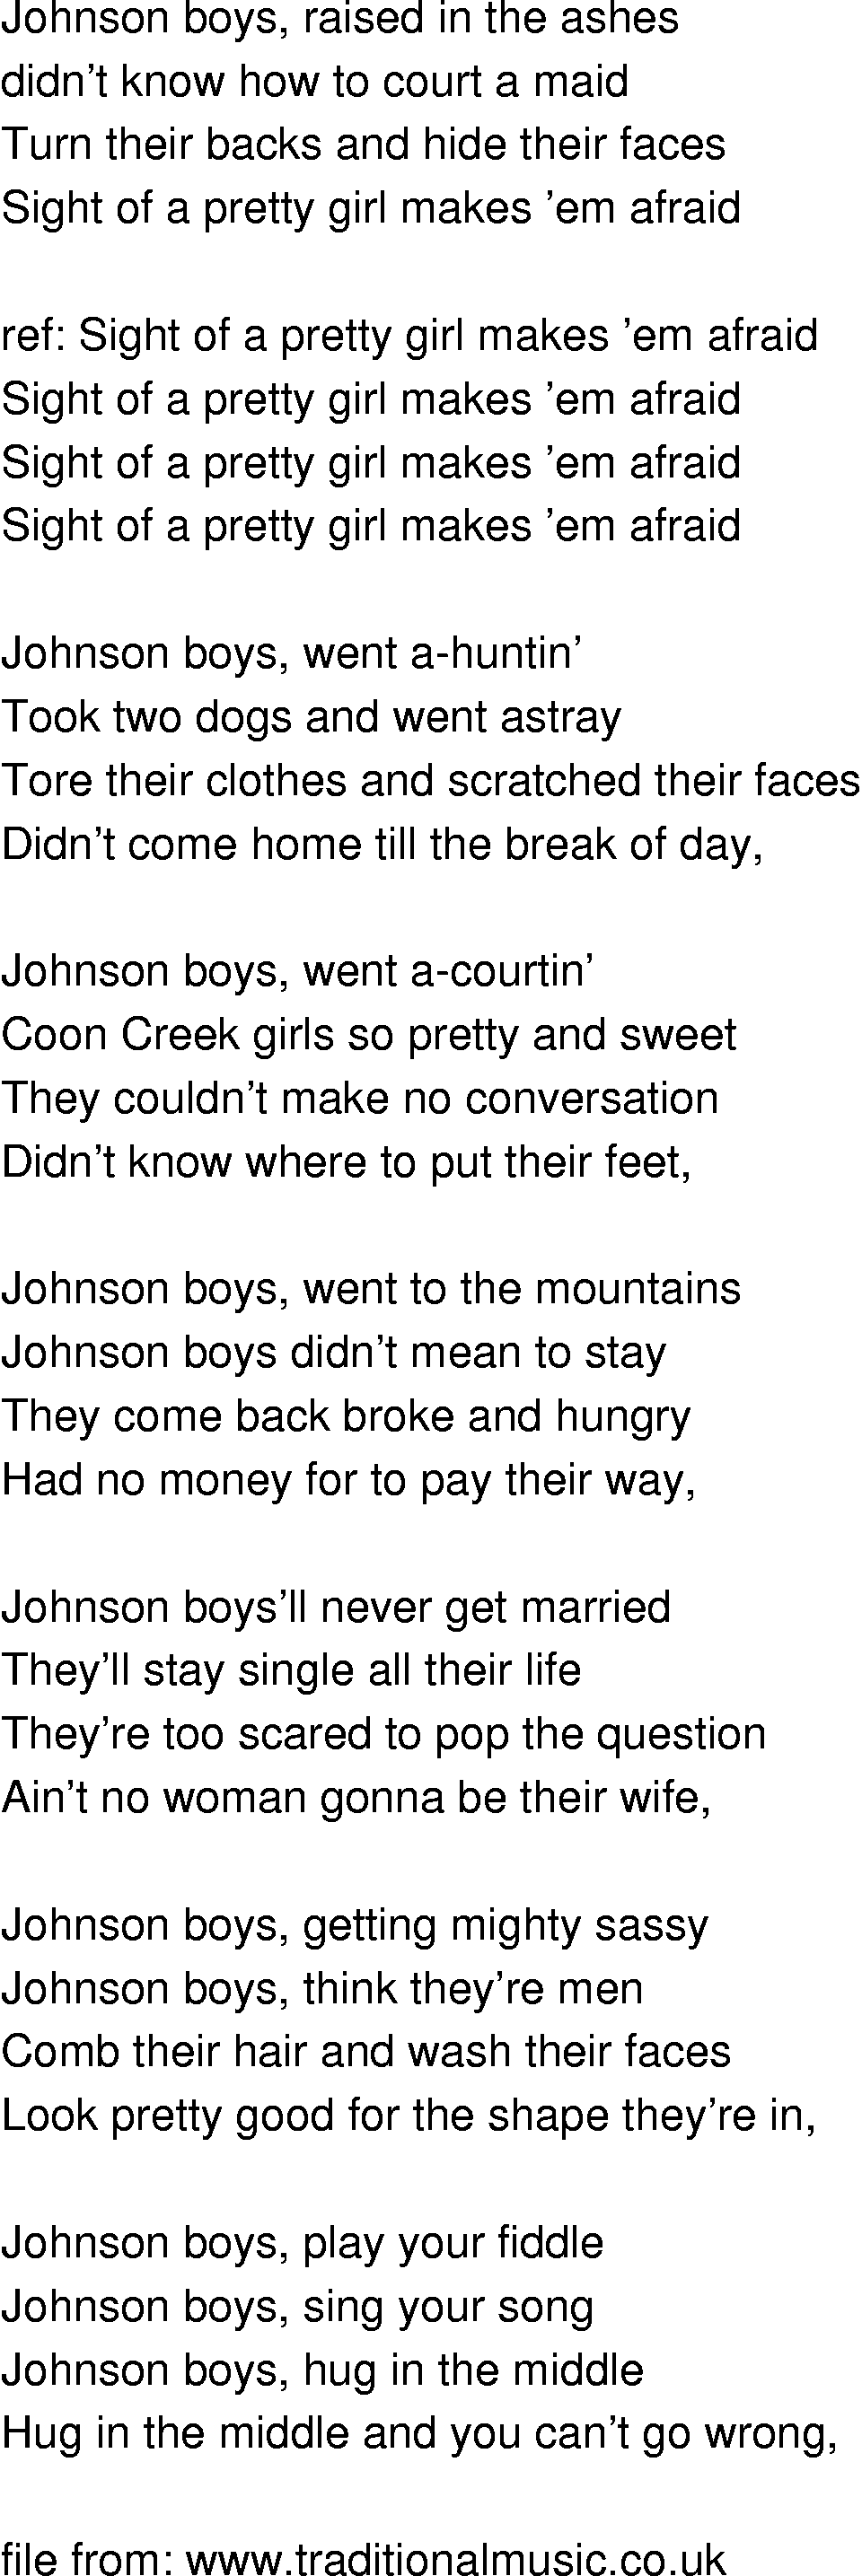 Old-Time (oldtimey) Song Lyrics - johnson boys